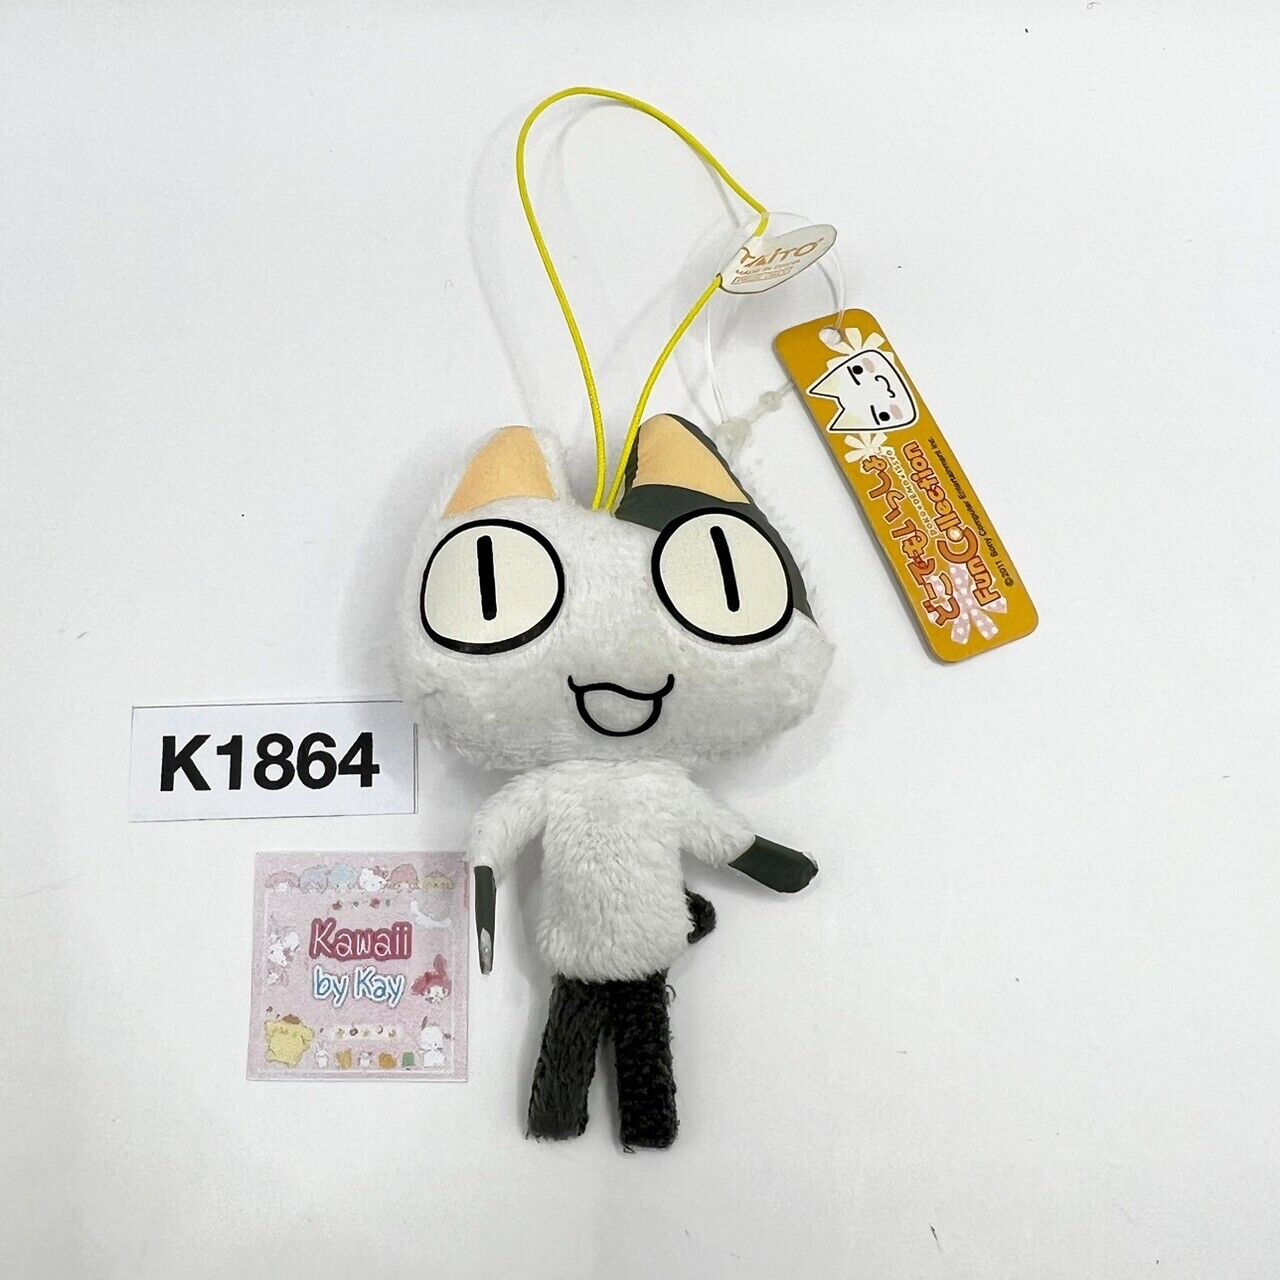 SCEI 2011 Doko Demo Issyo Toro Inoue Mini Mini Mascot Plush Japan K1864